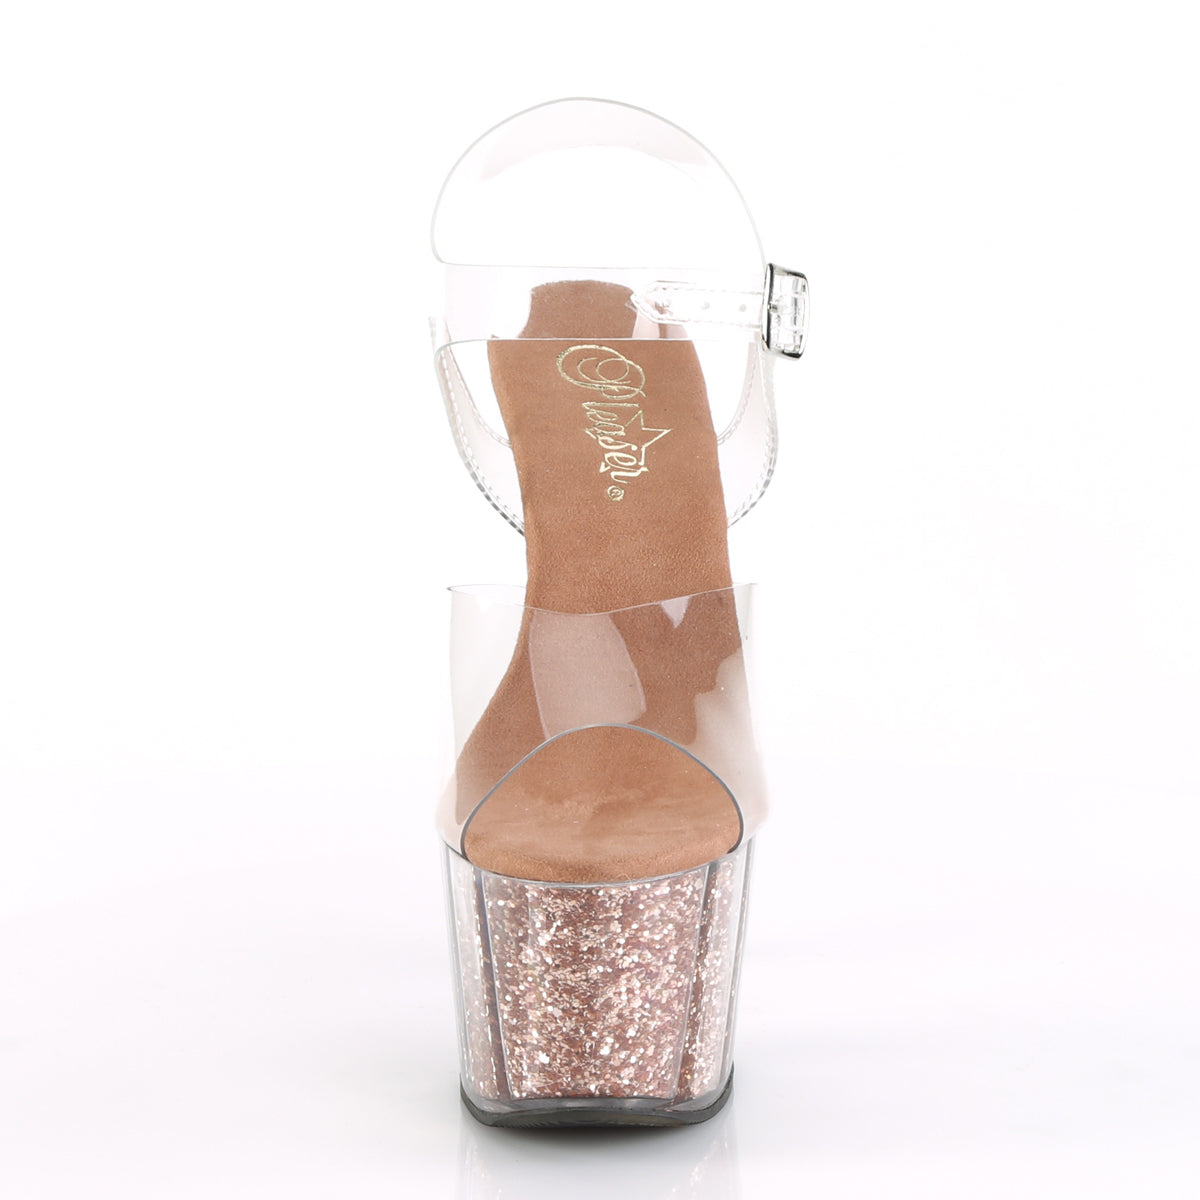 Pleaser Womens Sandals ADORE-708G Clr/Rose Gold Glitter Inserts